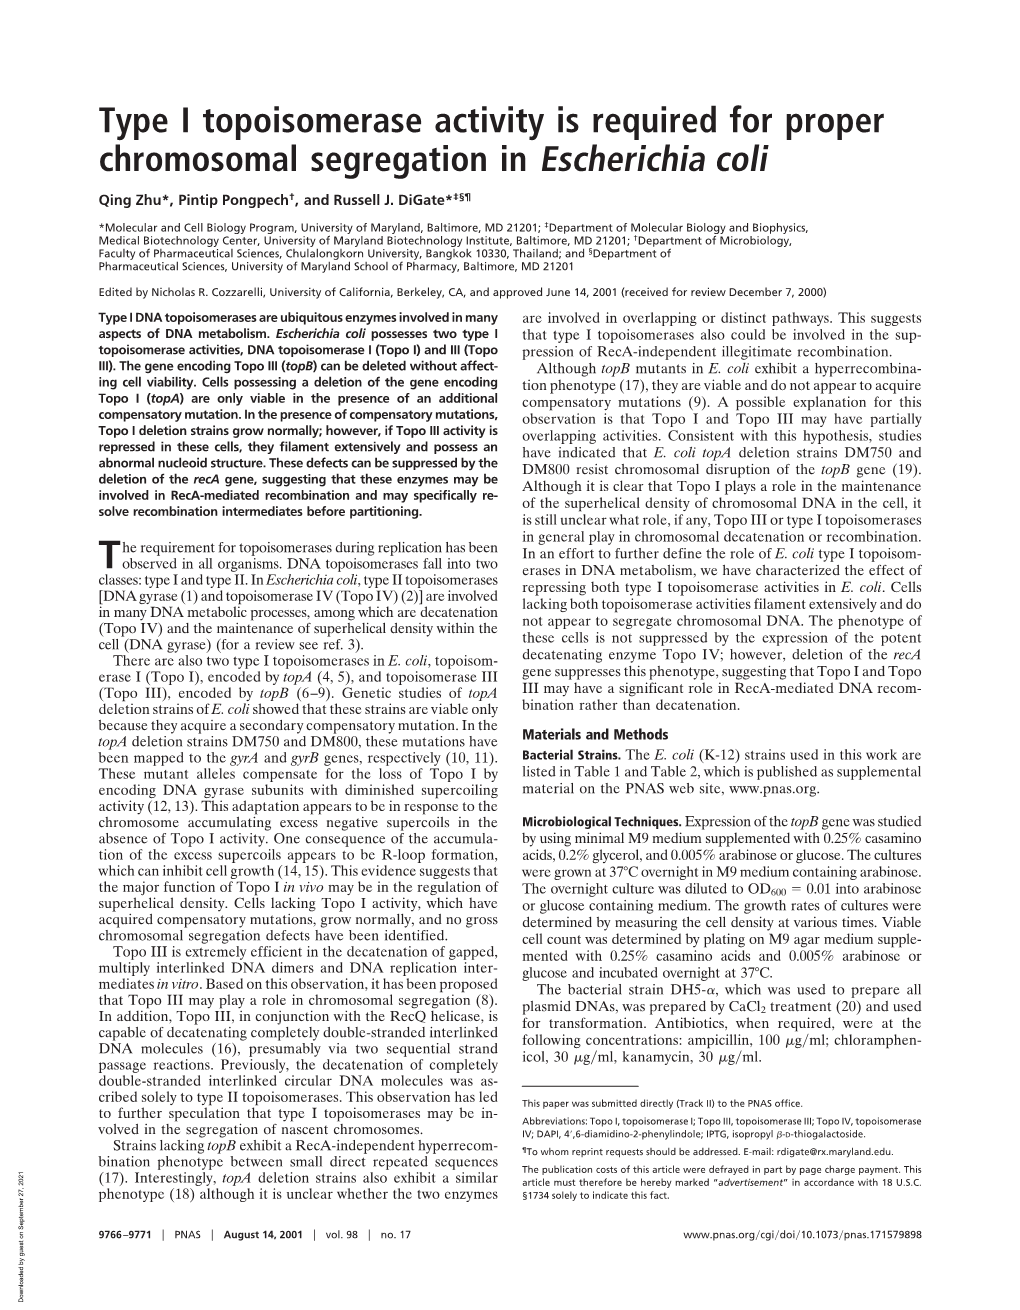 Type I Topoisomerase Activity Is Required for Proper Chromosomal Segregation in Escherichia Coli